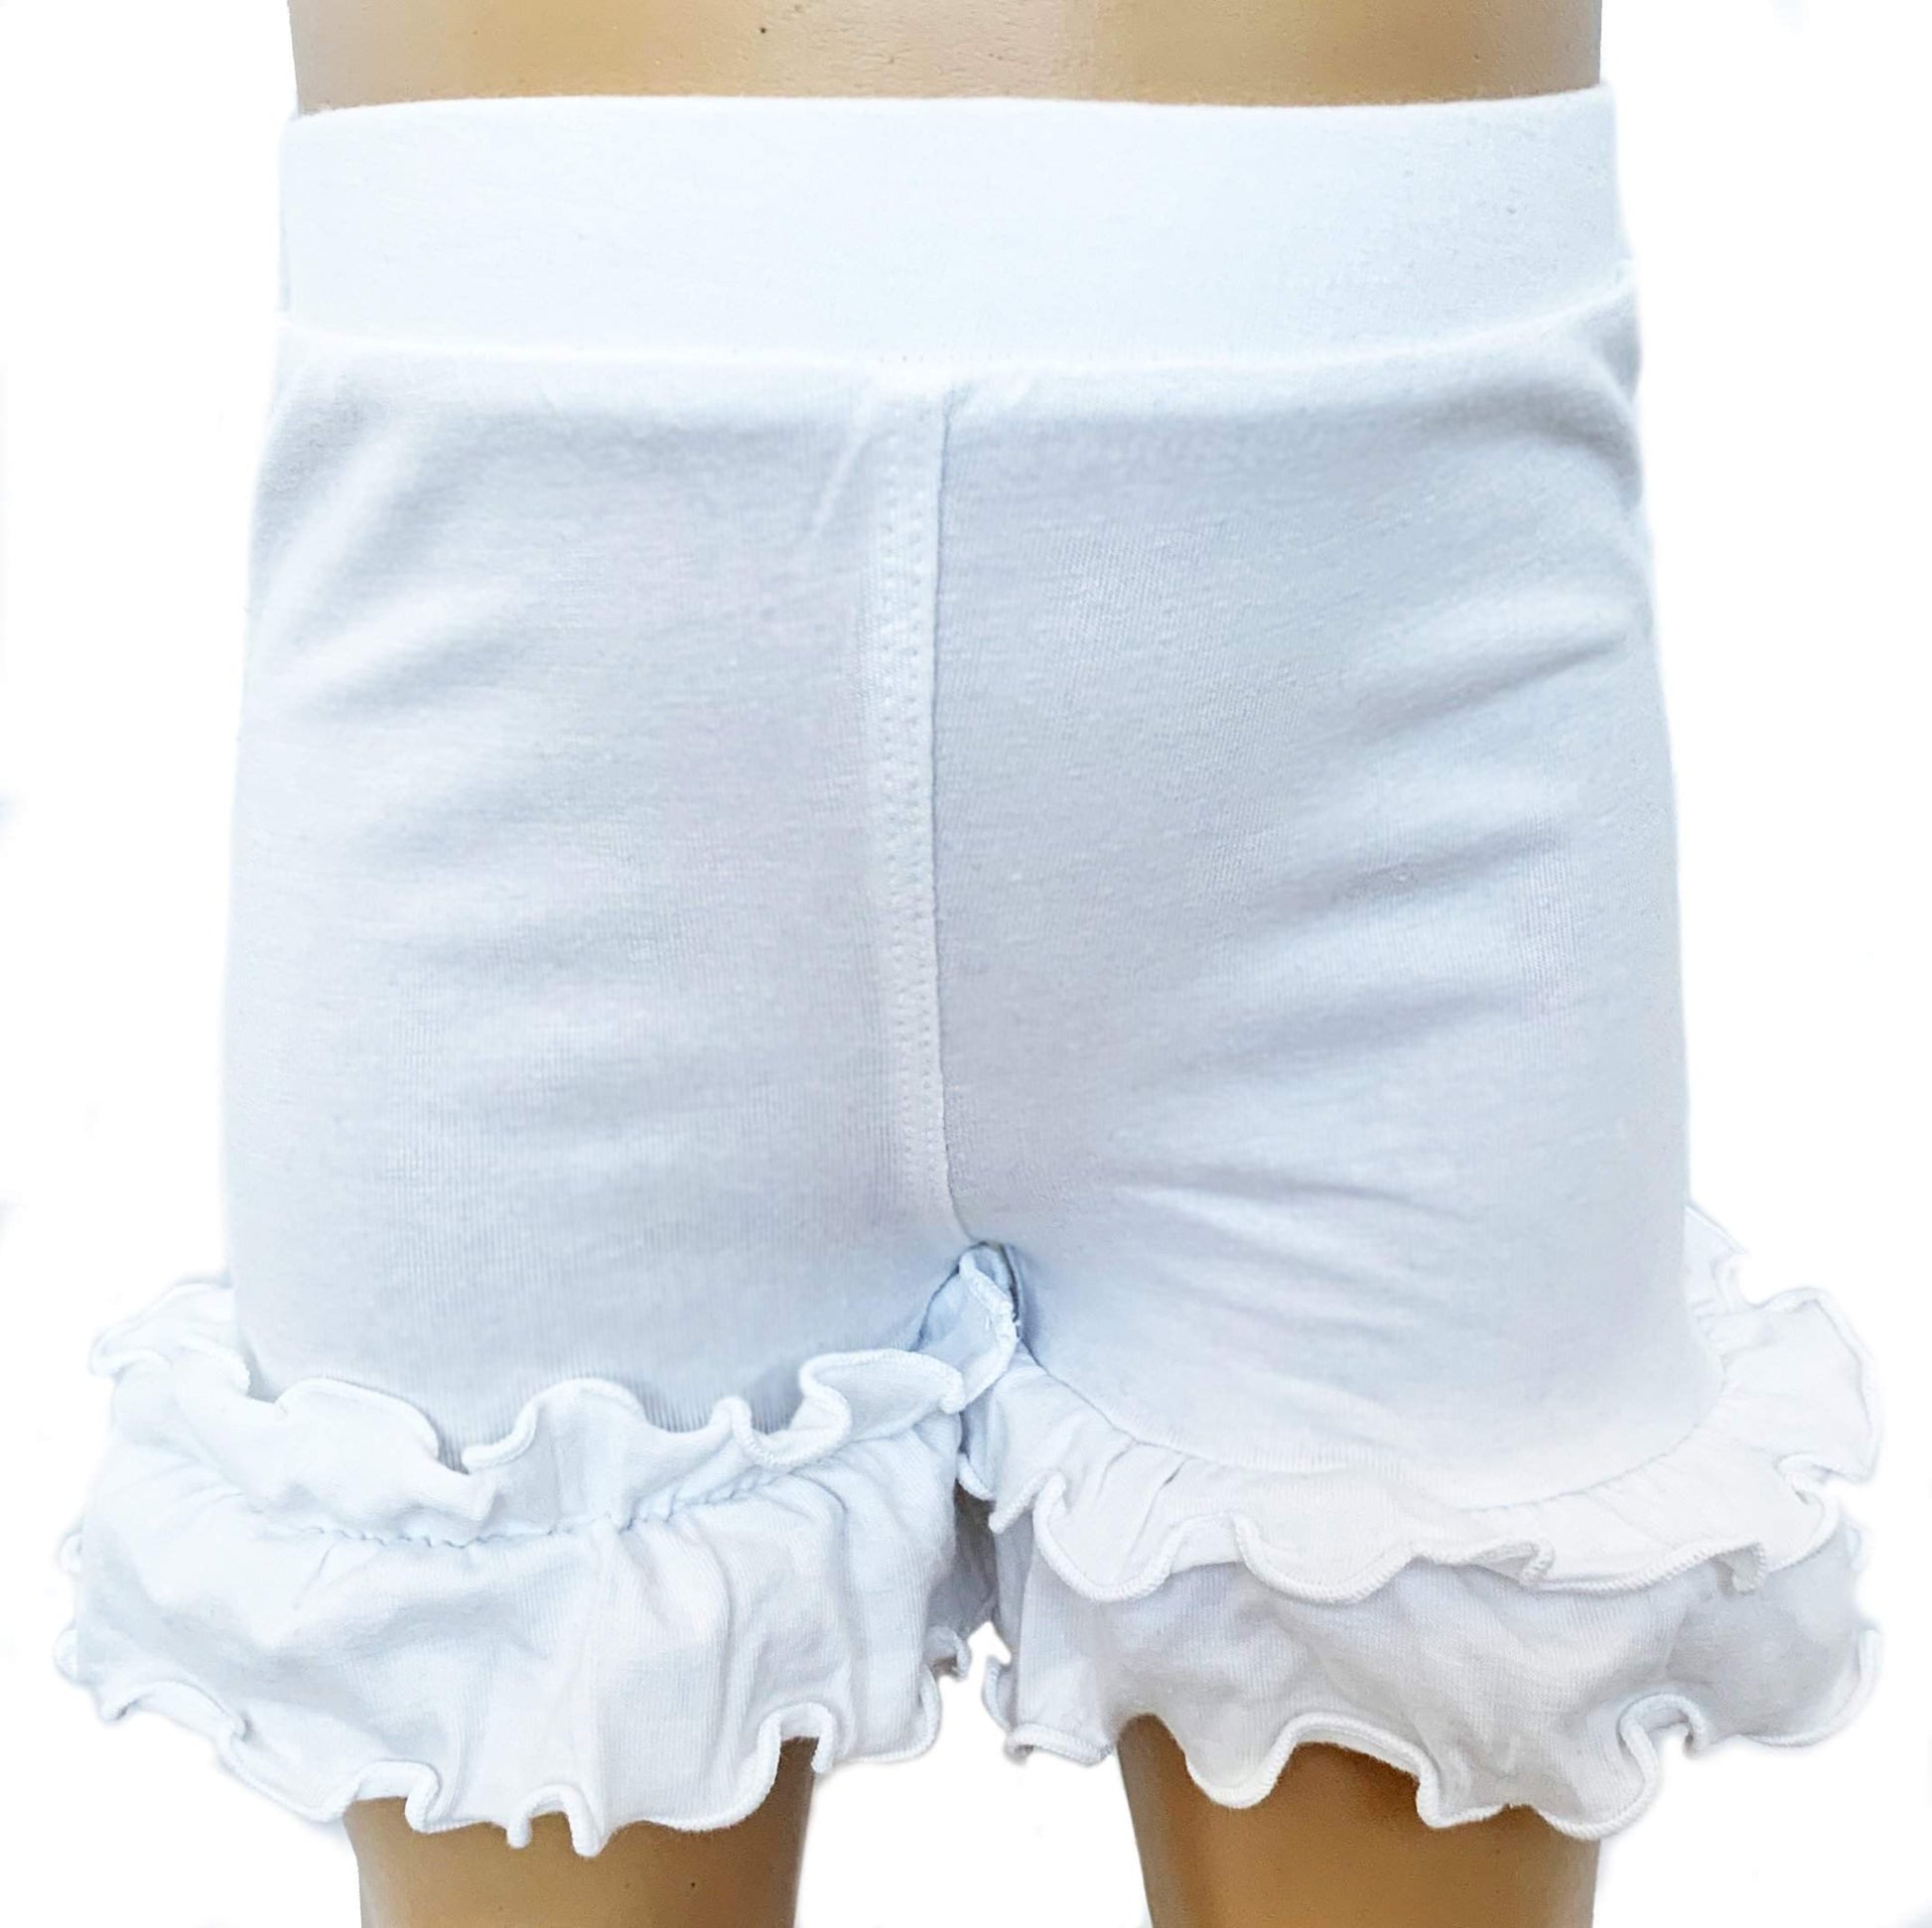 White Ruffle Butt Shorts Baby/Toddler 6M-3T-AnnLoren-12-24 Mo,2-3T,6-12 Mo,ANNLOREN,Shorts,Spring & Summer,Spring & Summer 2020,White